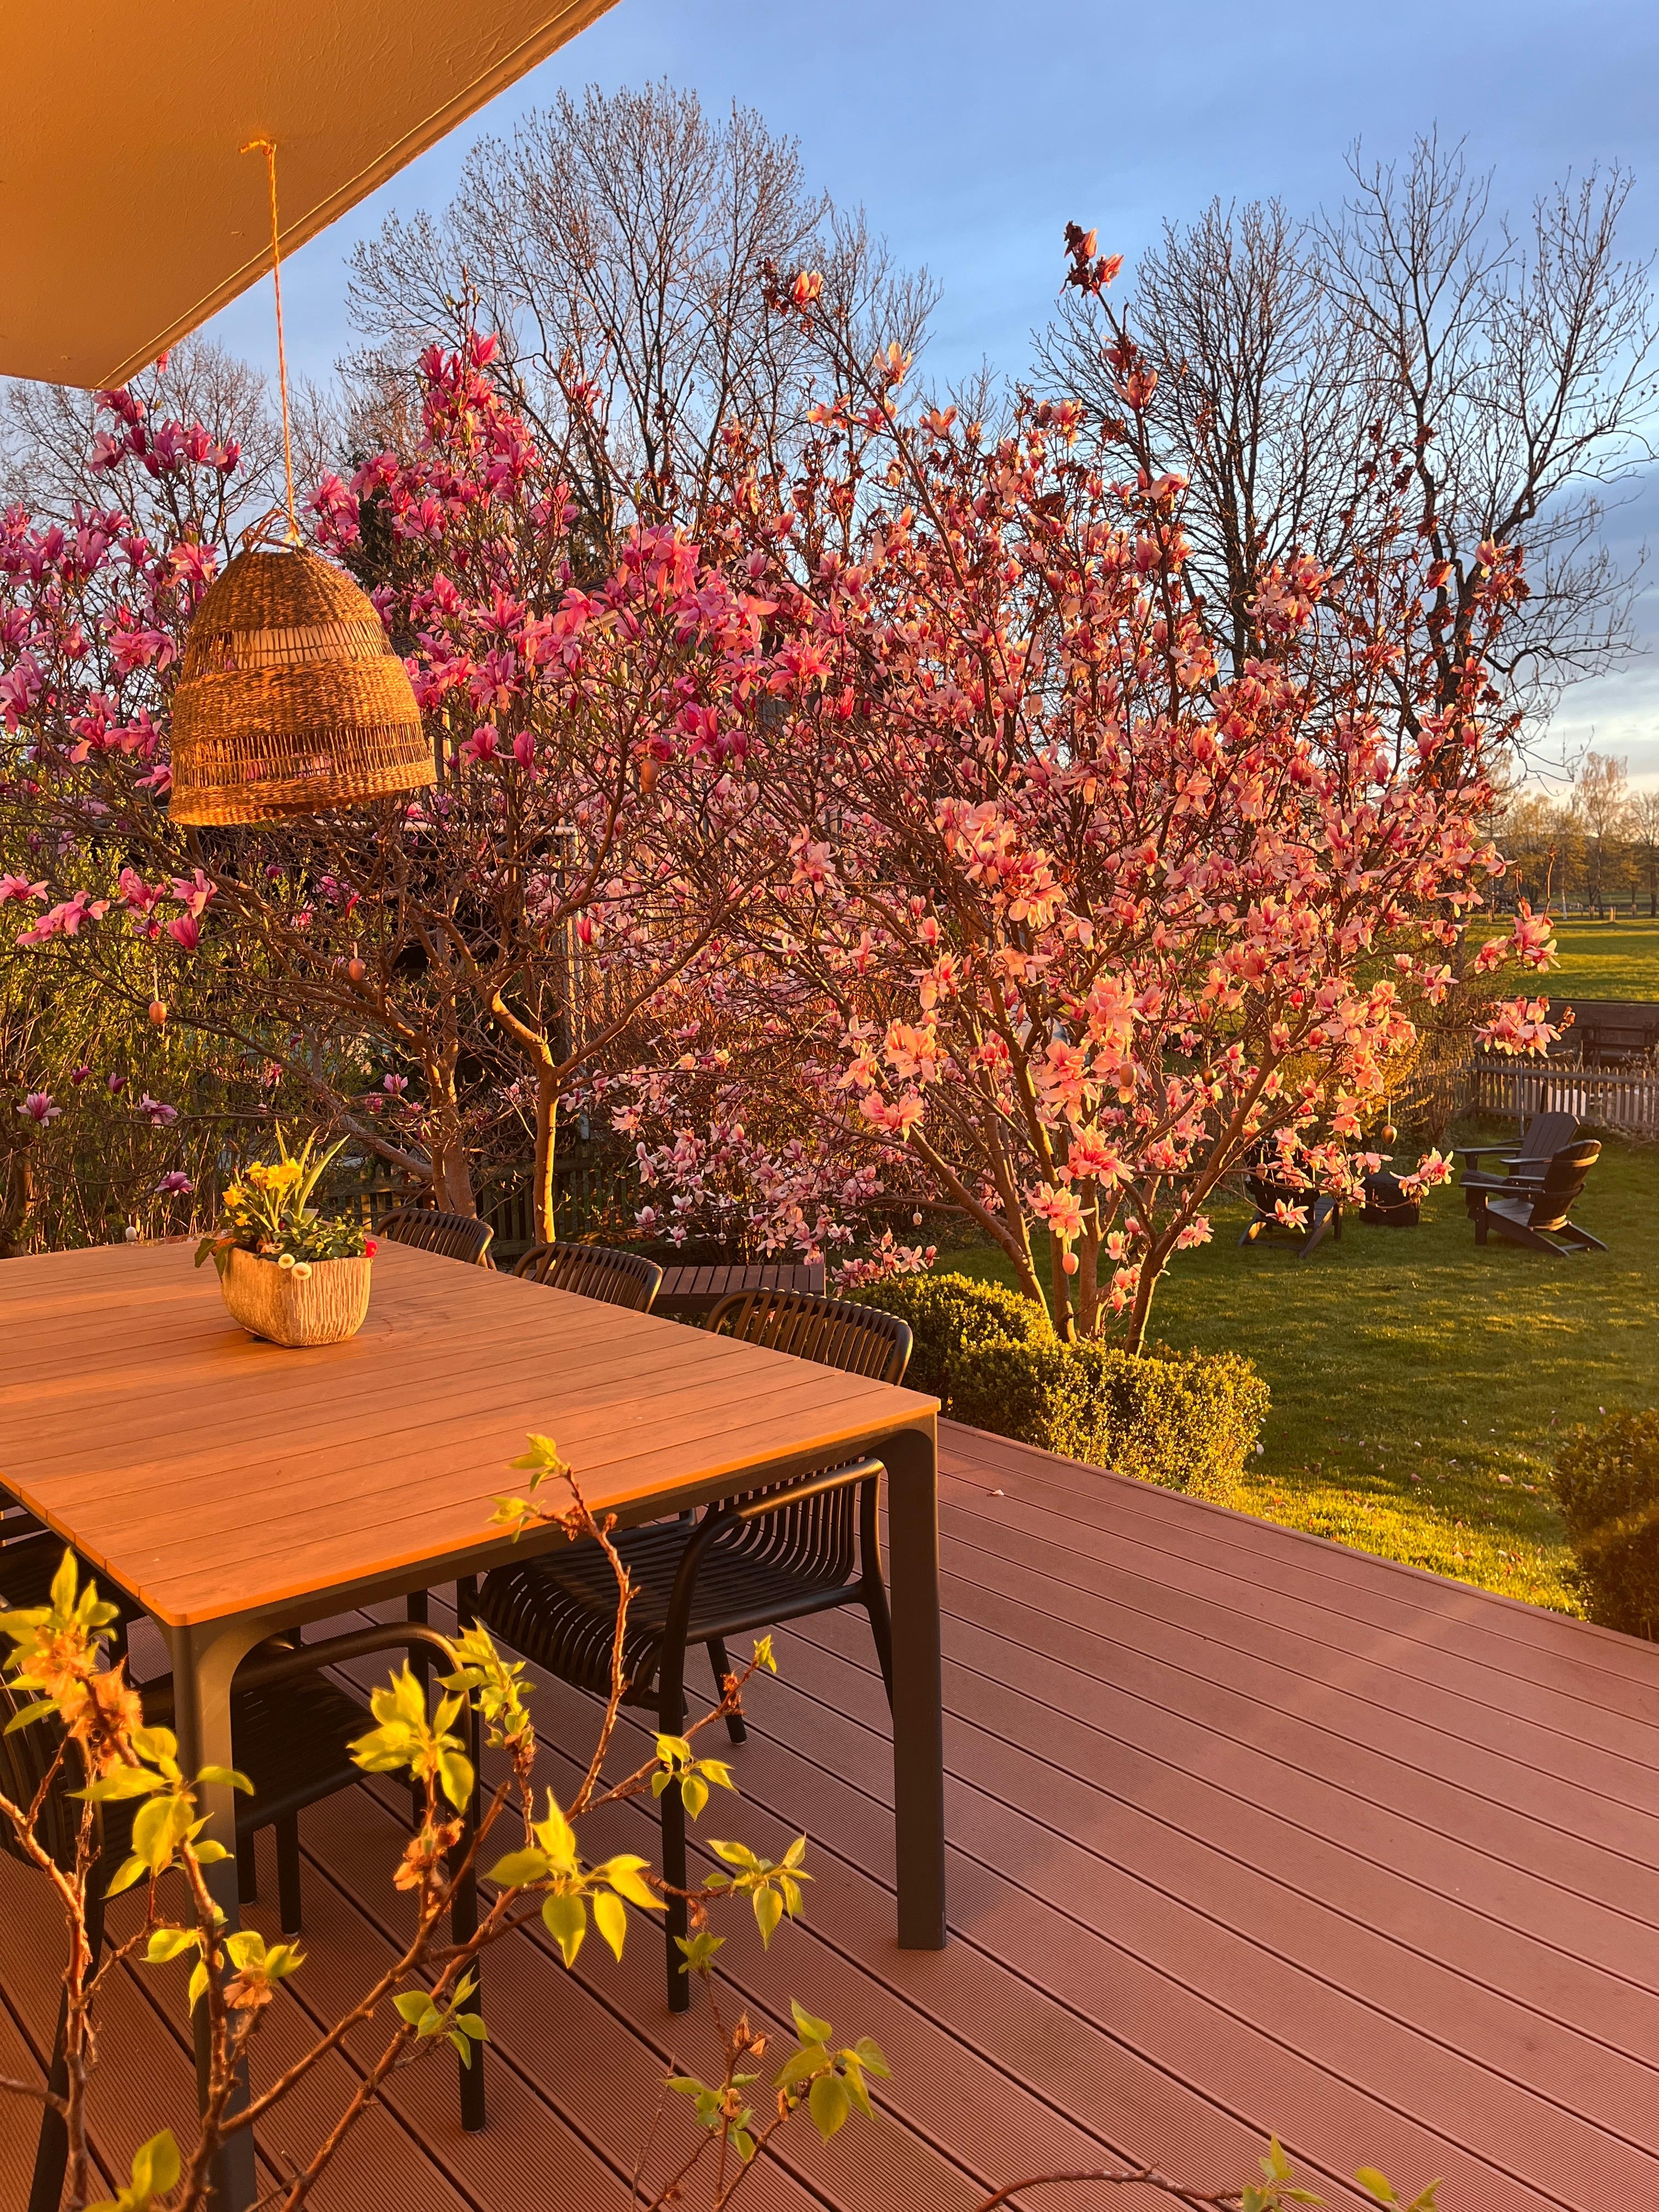 Sundowner ☀️ 
#aprilwetter#garten#outdoorliving#sundowner#magnolie#frühling#feuerstelle#adirondack#sunset#abendsonne